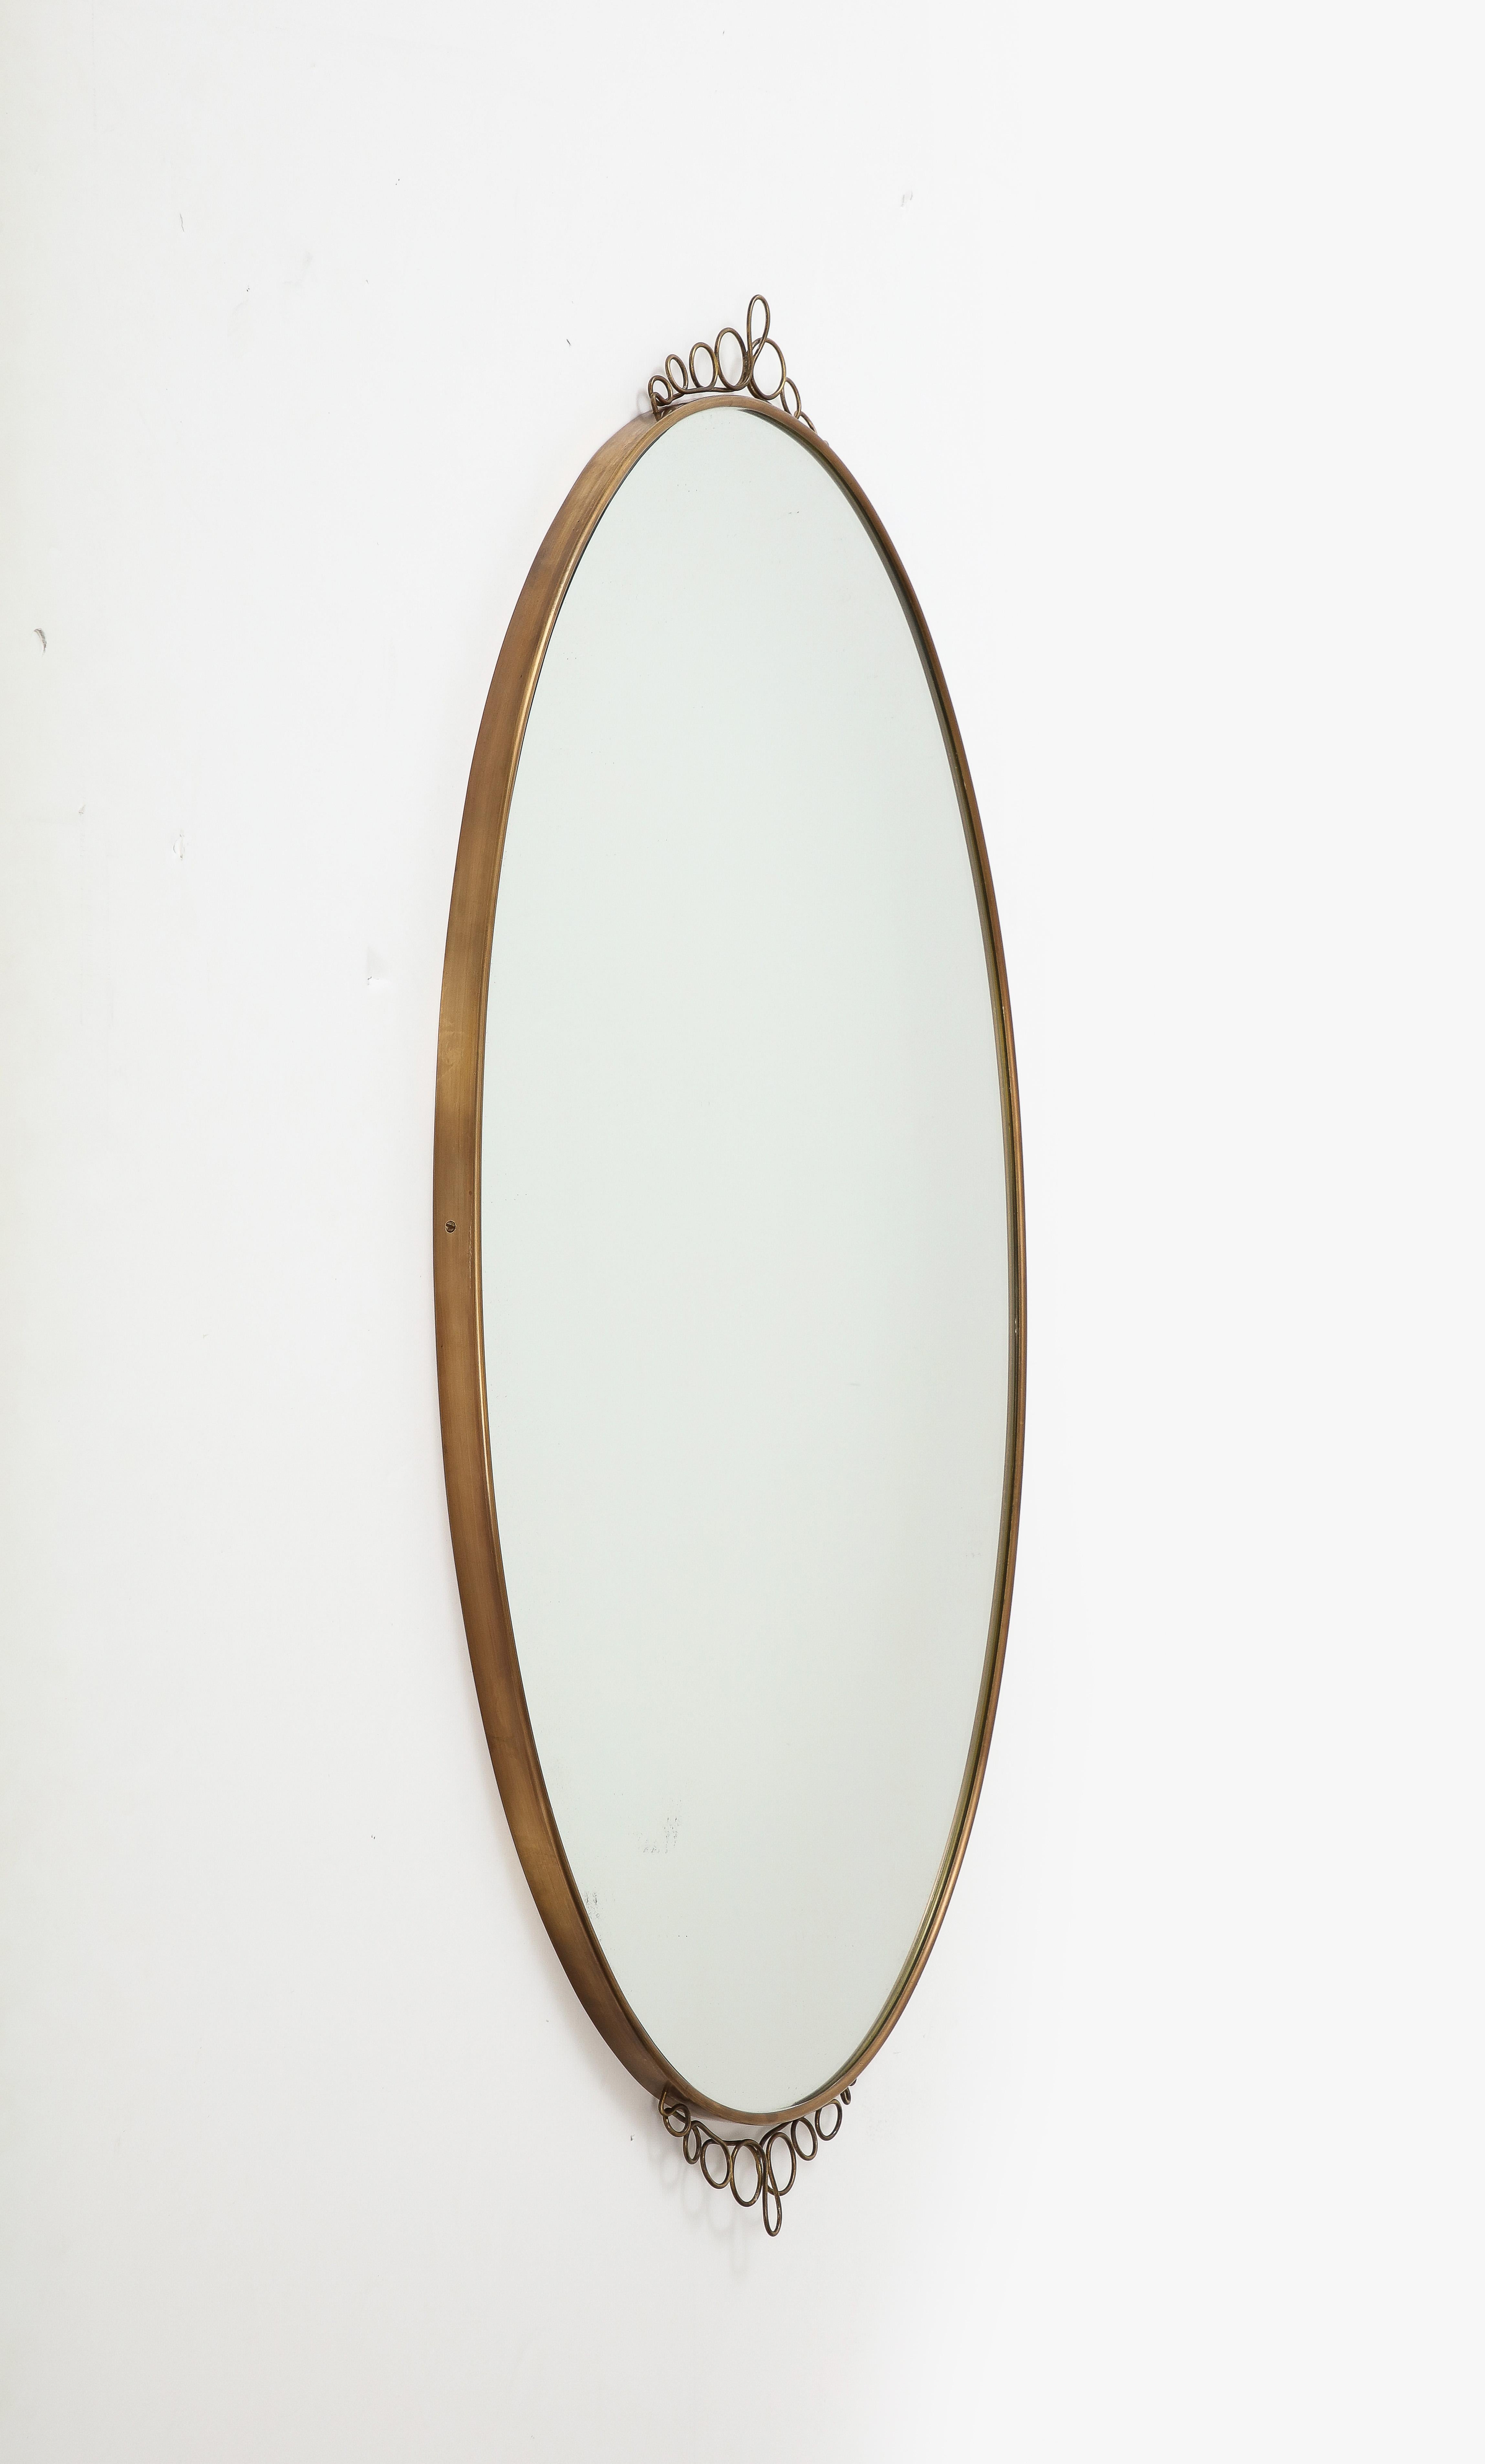 Mid-20th Century 1960s Italian Modernist Oval Brass Wall Mirror with Scrolls